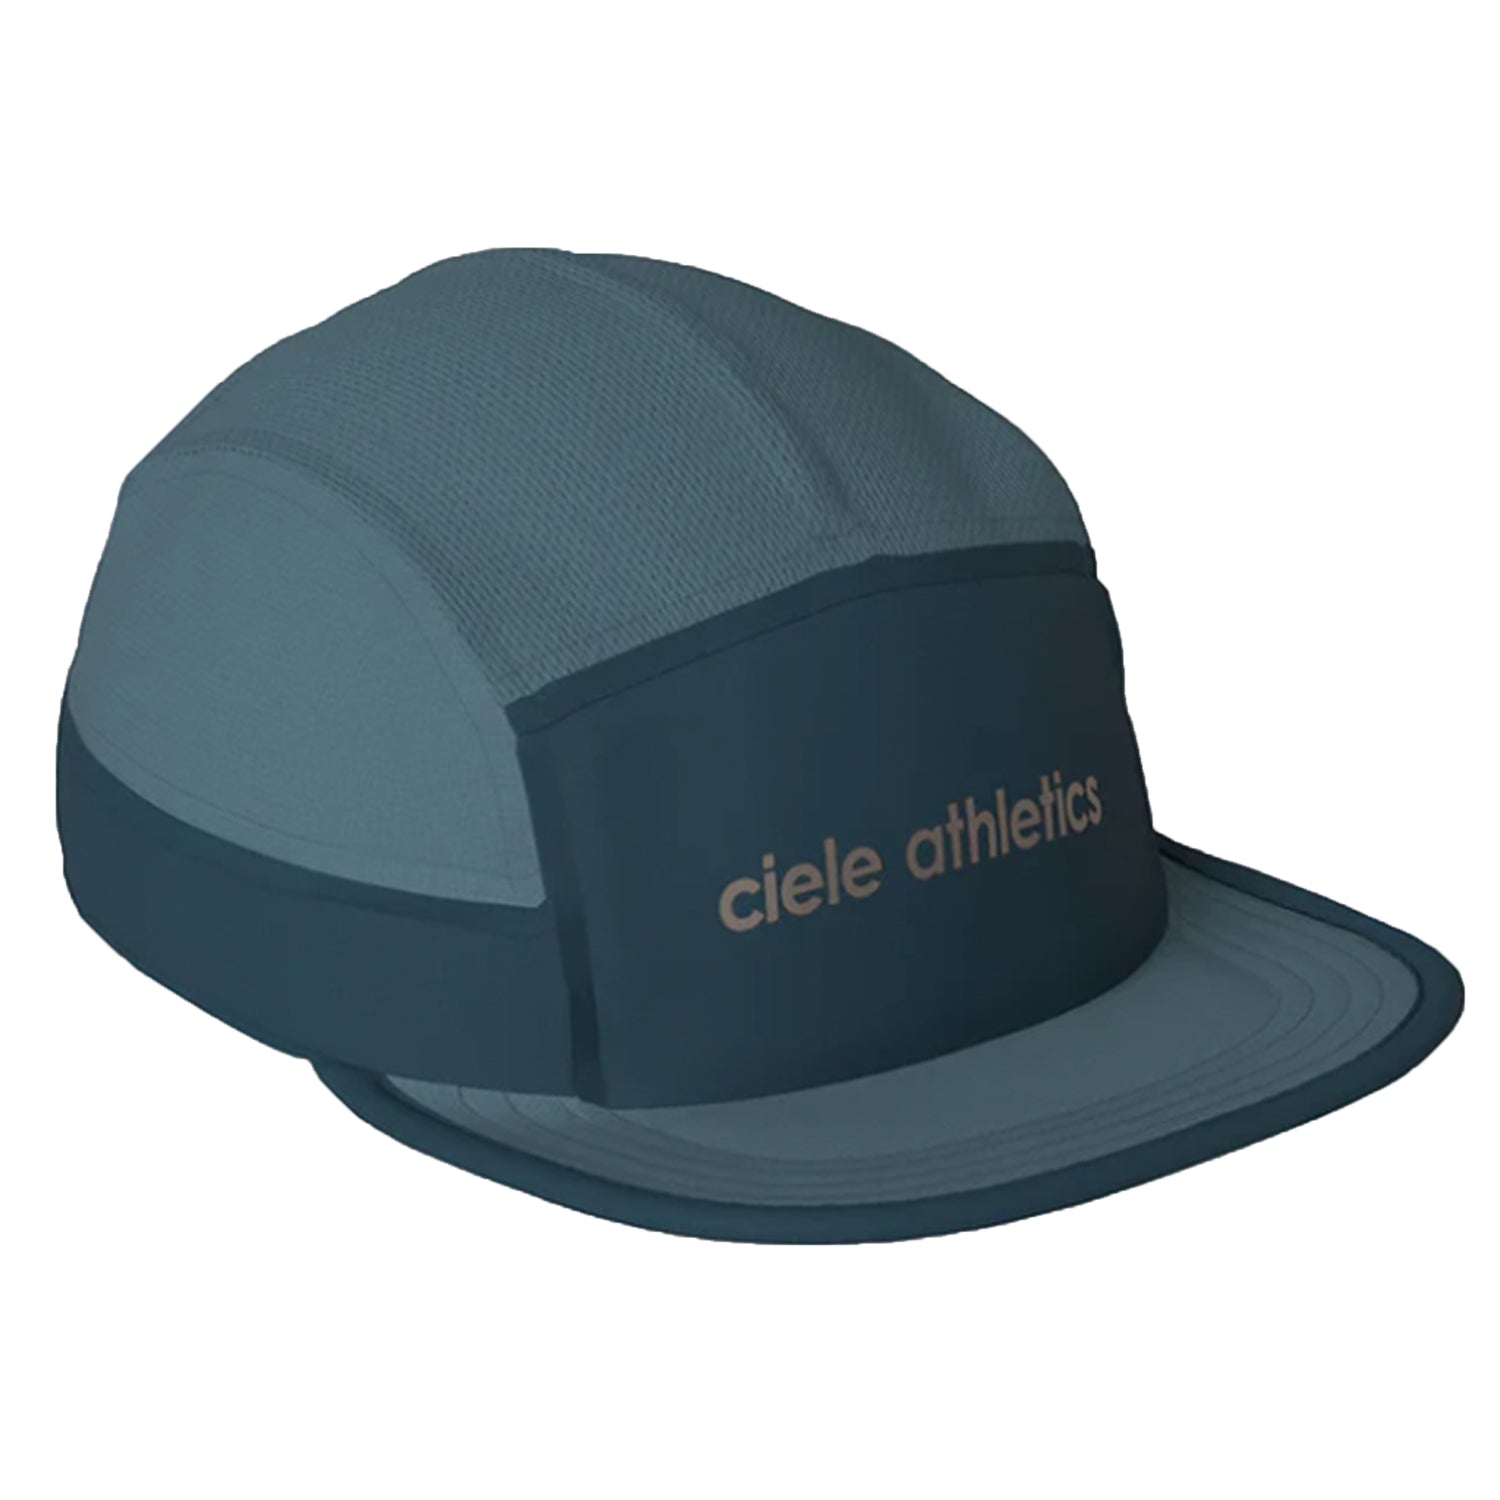 Ciele ALZcap running hat